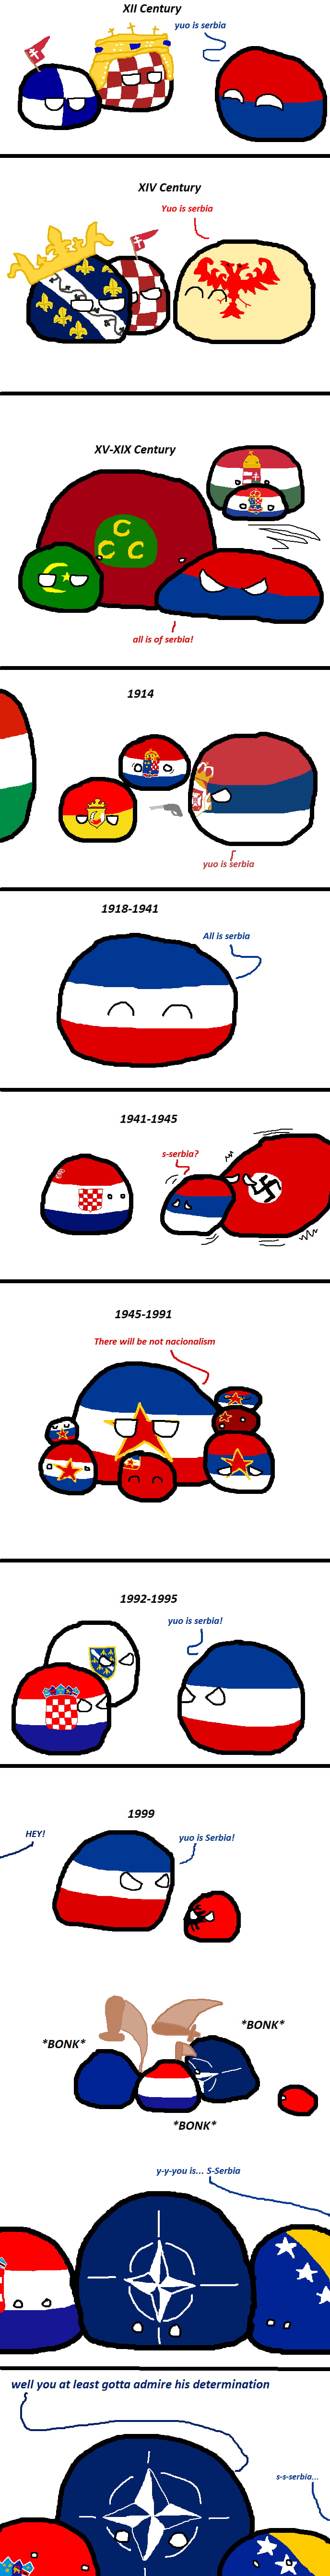 Serbia?